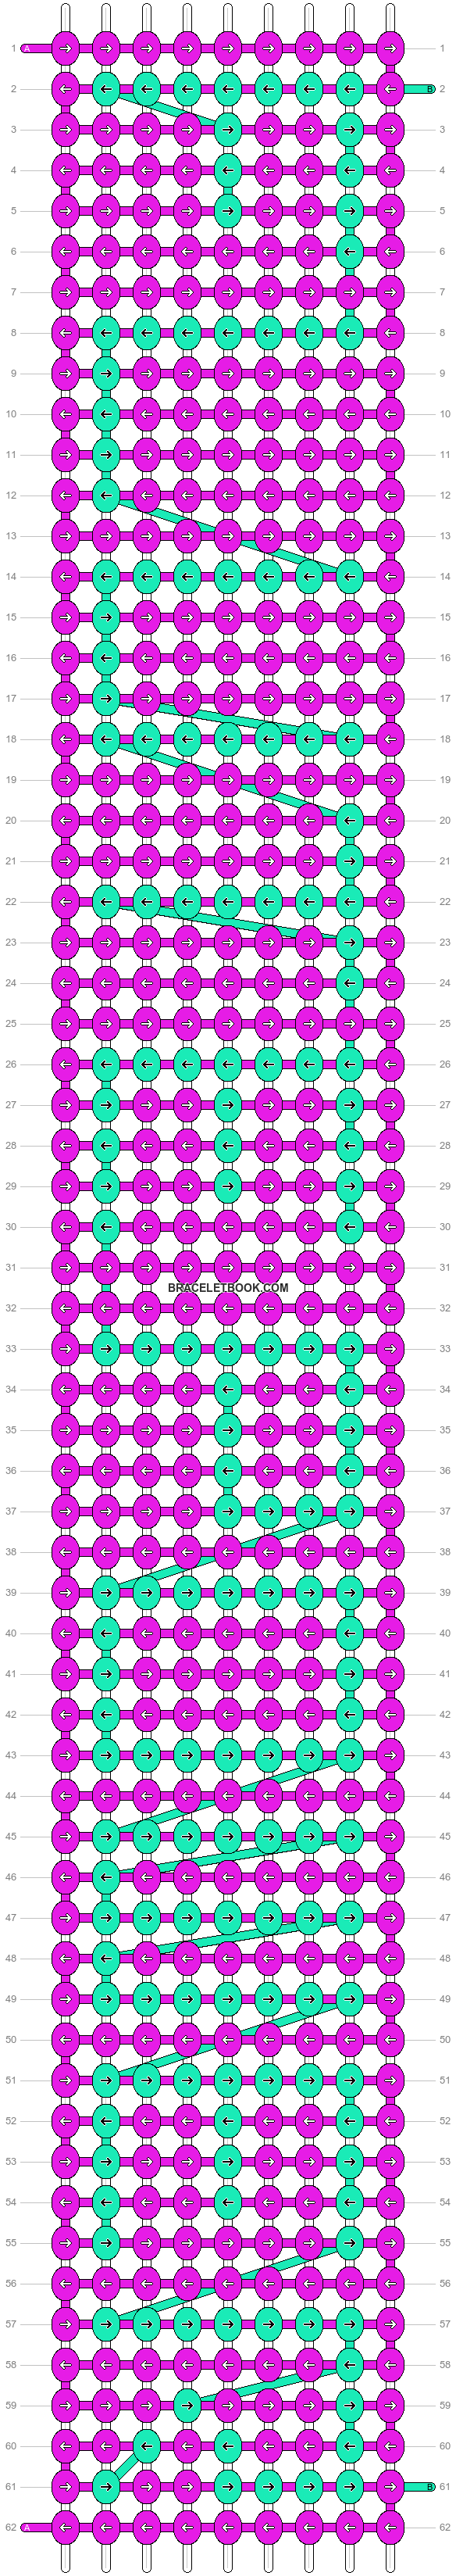 Alpha pattern #2345 variation #14621 pattern